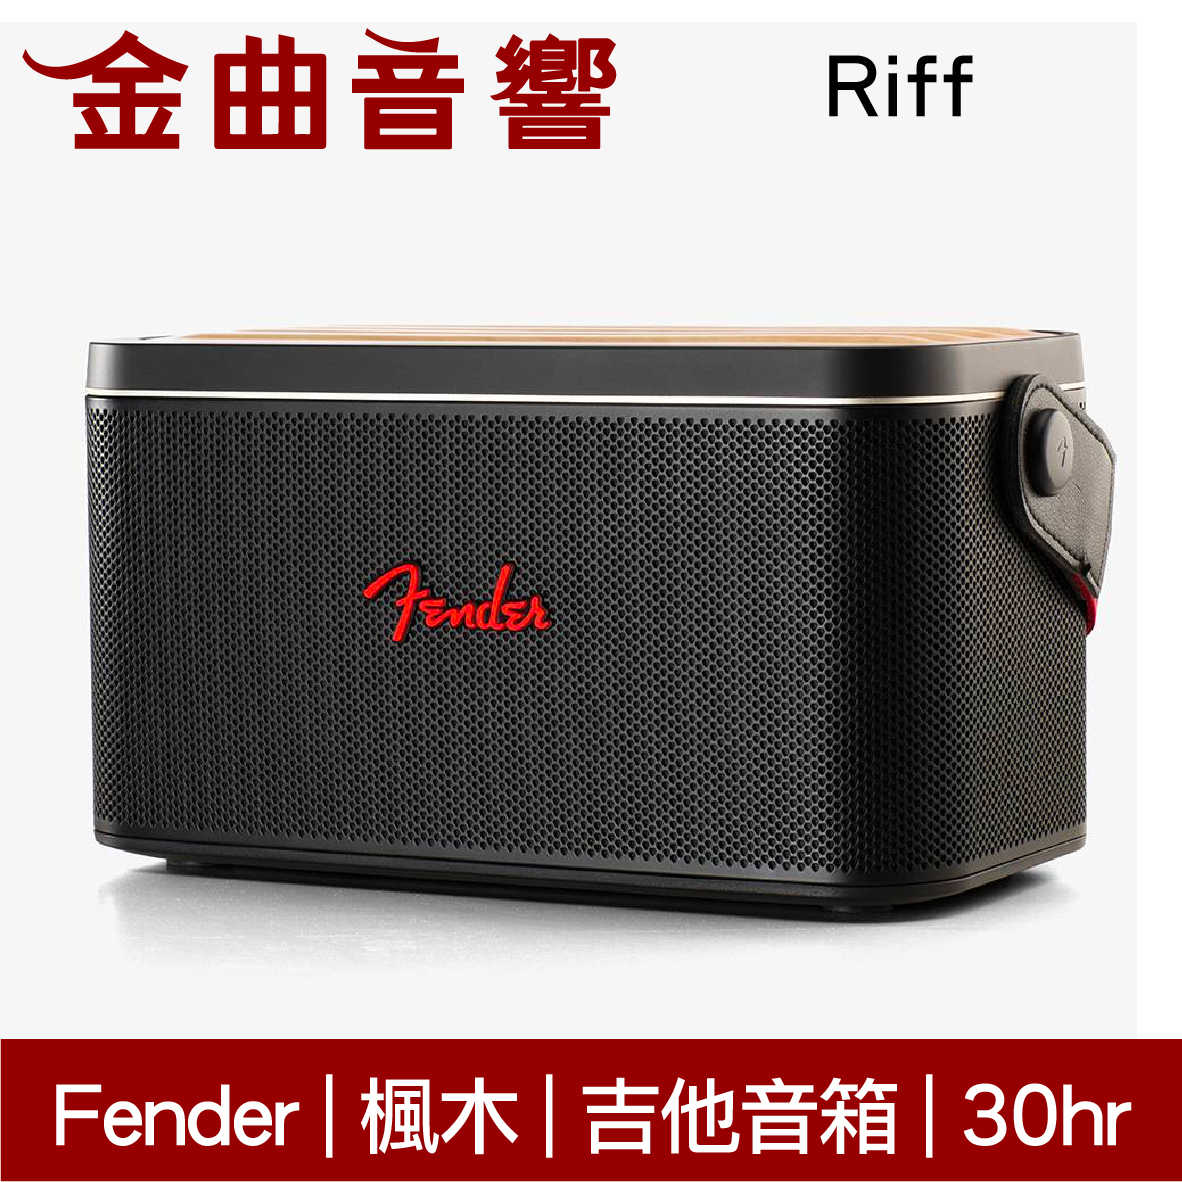 Fender Riff 音箱 楓木紋 吉他插孔 EQ模式 戶外 防水 可攜式 藍牙 喇叭 | 金曲音響